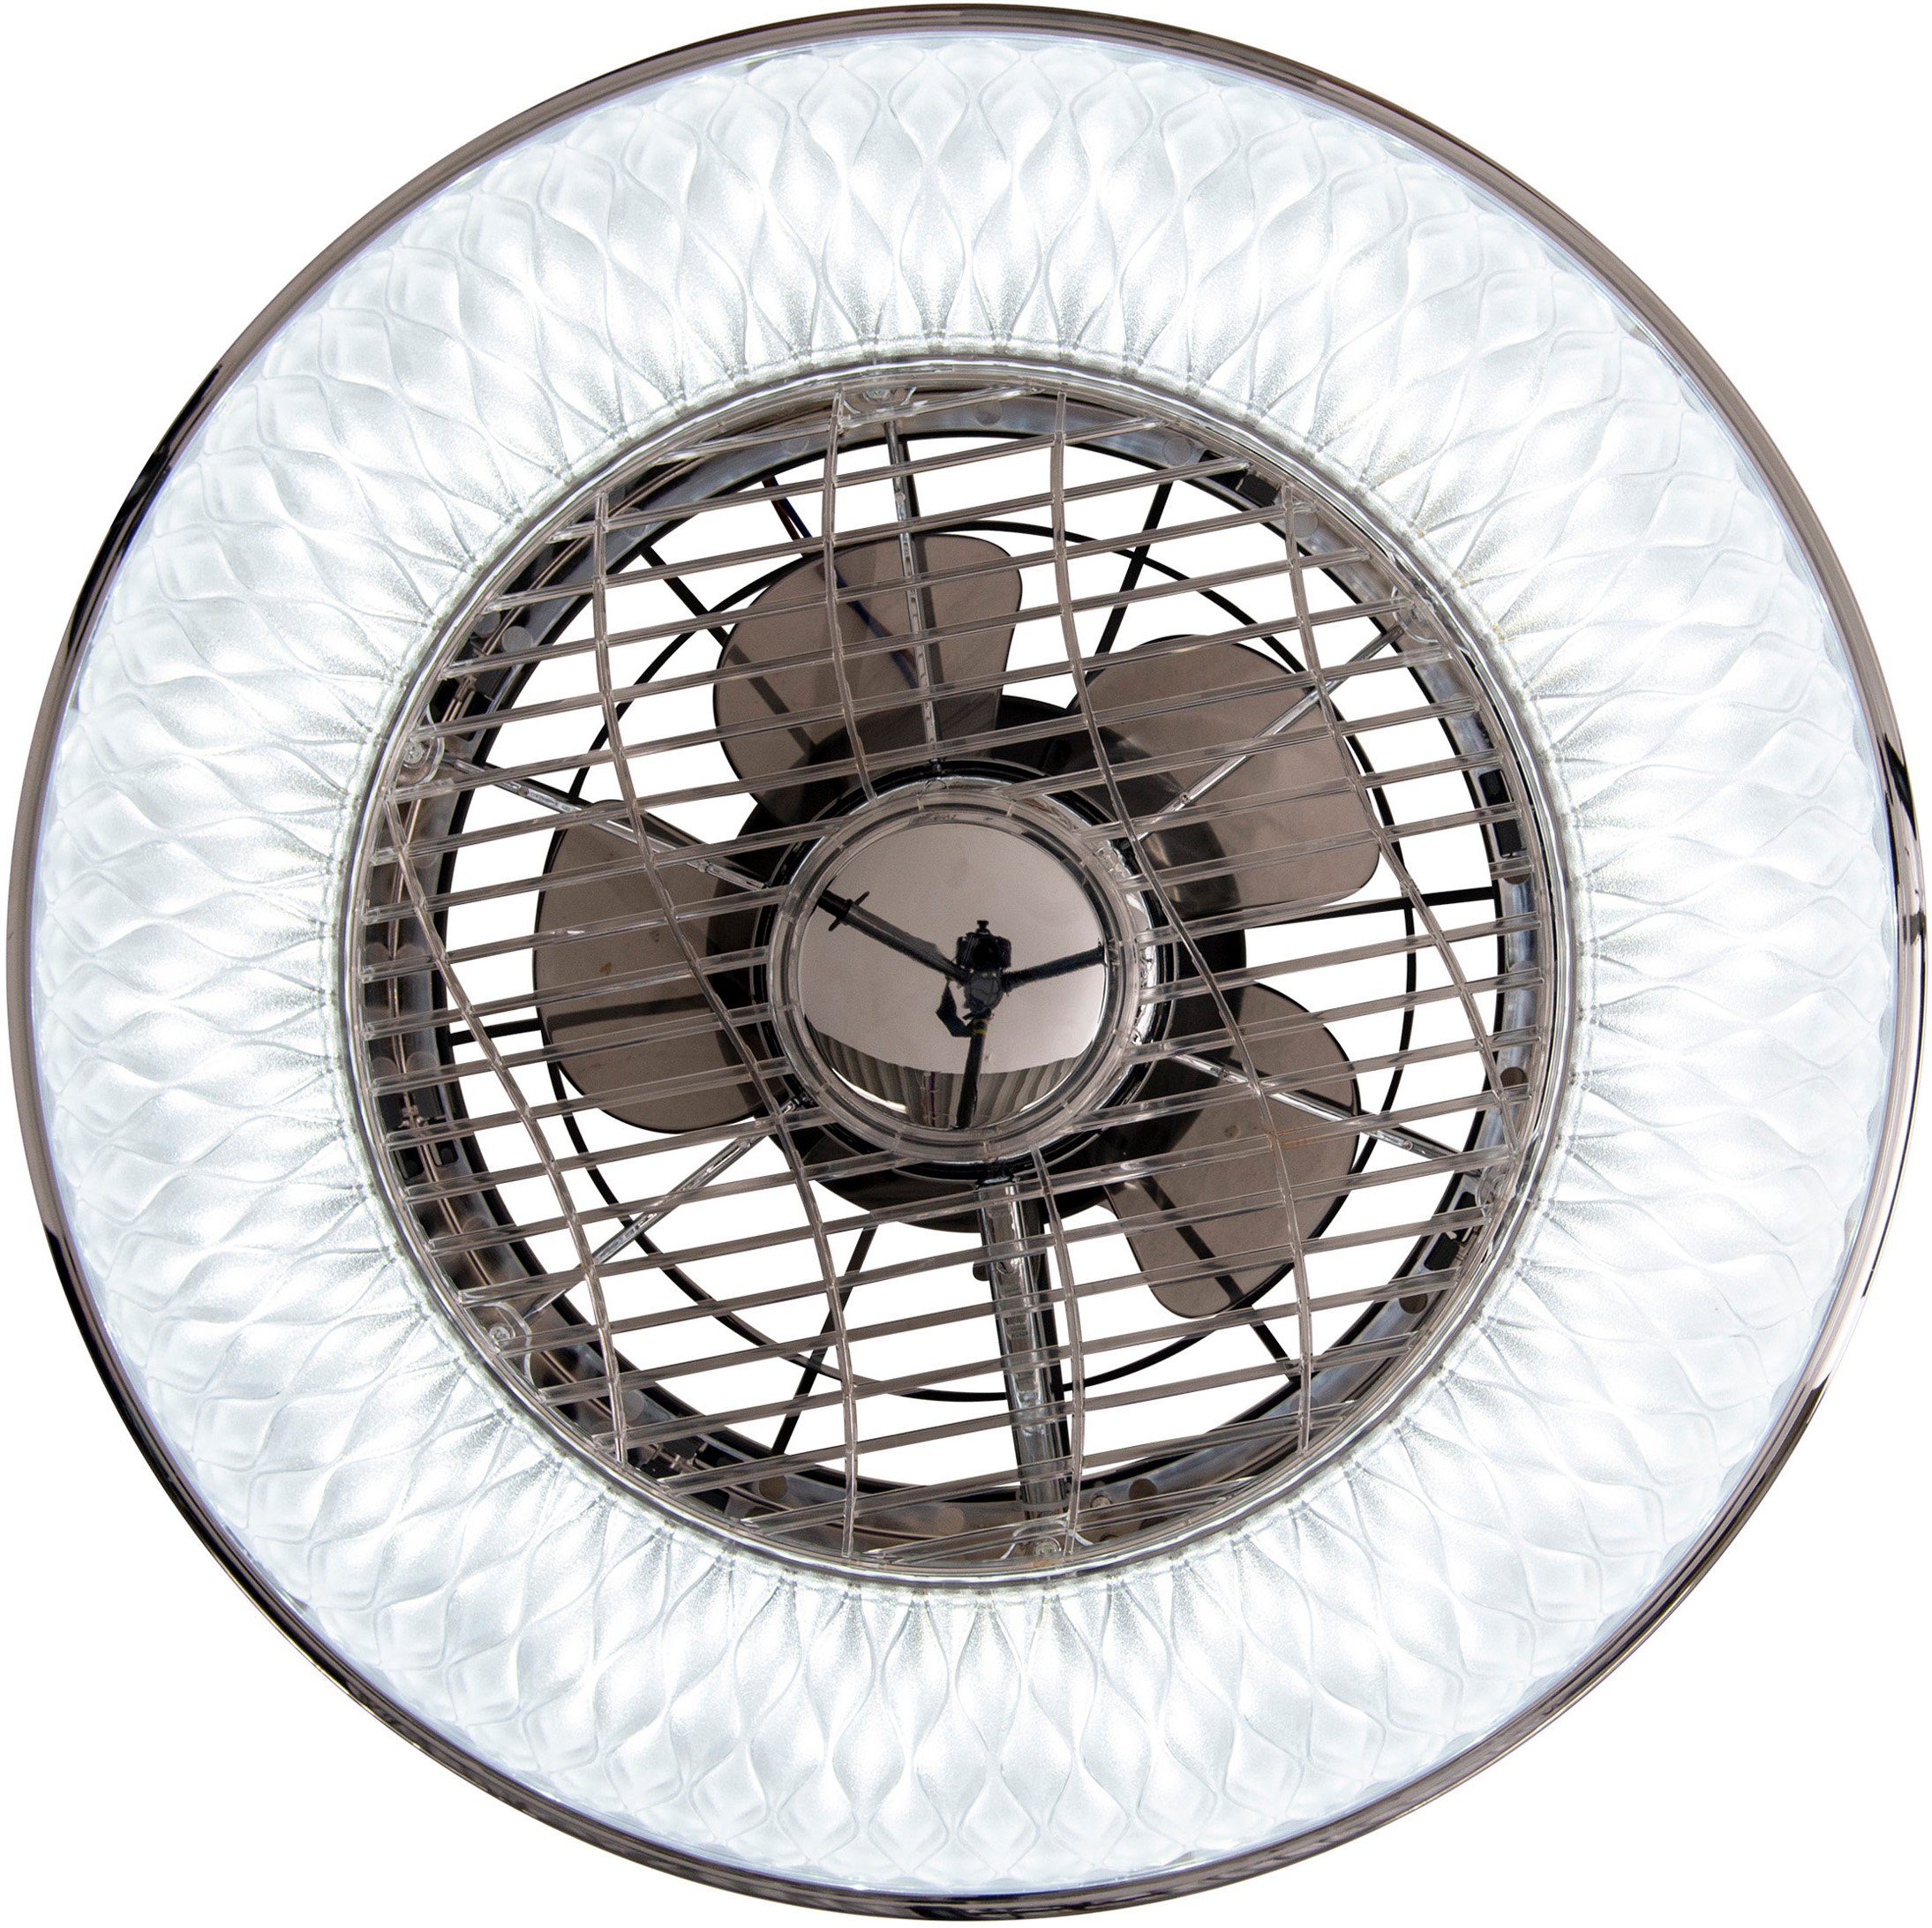 Deckenleuchte 1,5v warmweiß näve dimmbar, LED Viento, LED Ventilator, Ventilatorfunktion, - Batterien Fernbedienung, fest AAA kaltweiß, integriert, CCT,